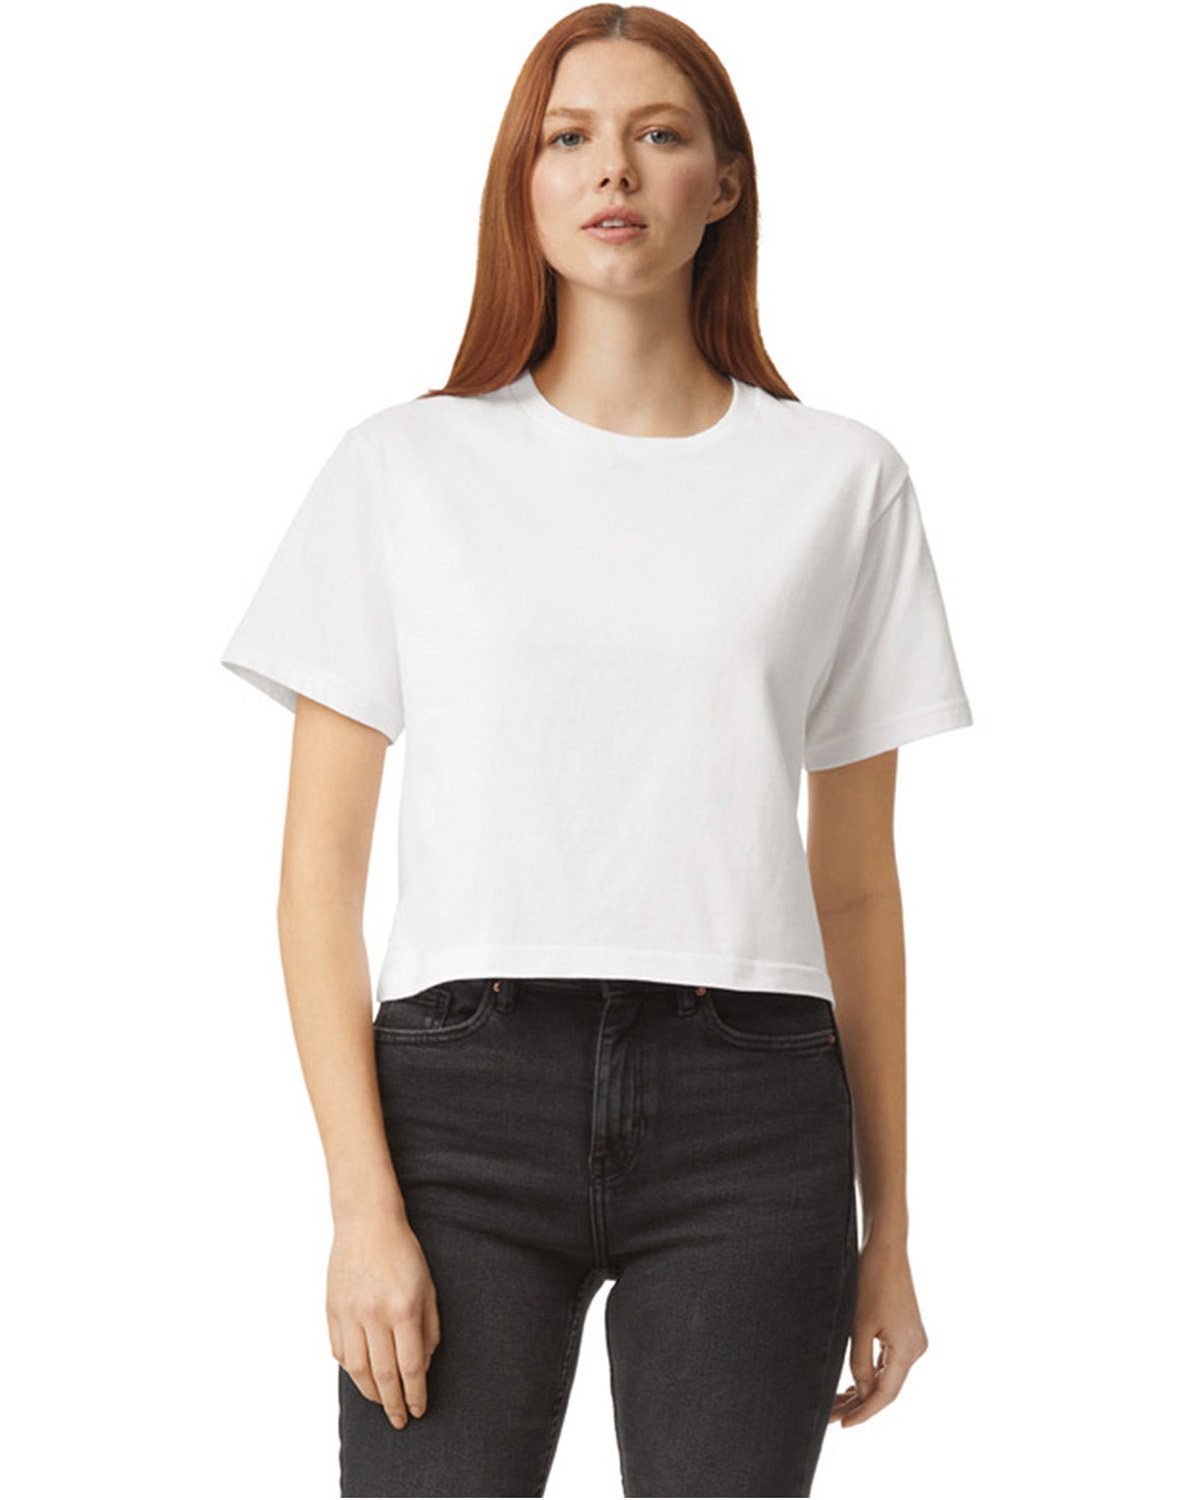 American Apparel Ladies' Fine Jersey Boxy T-Shirt WHITE 